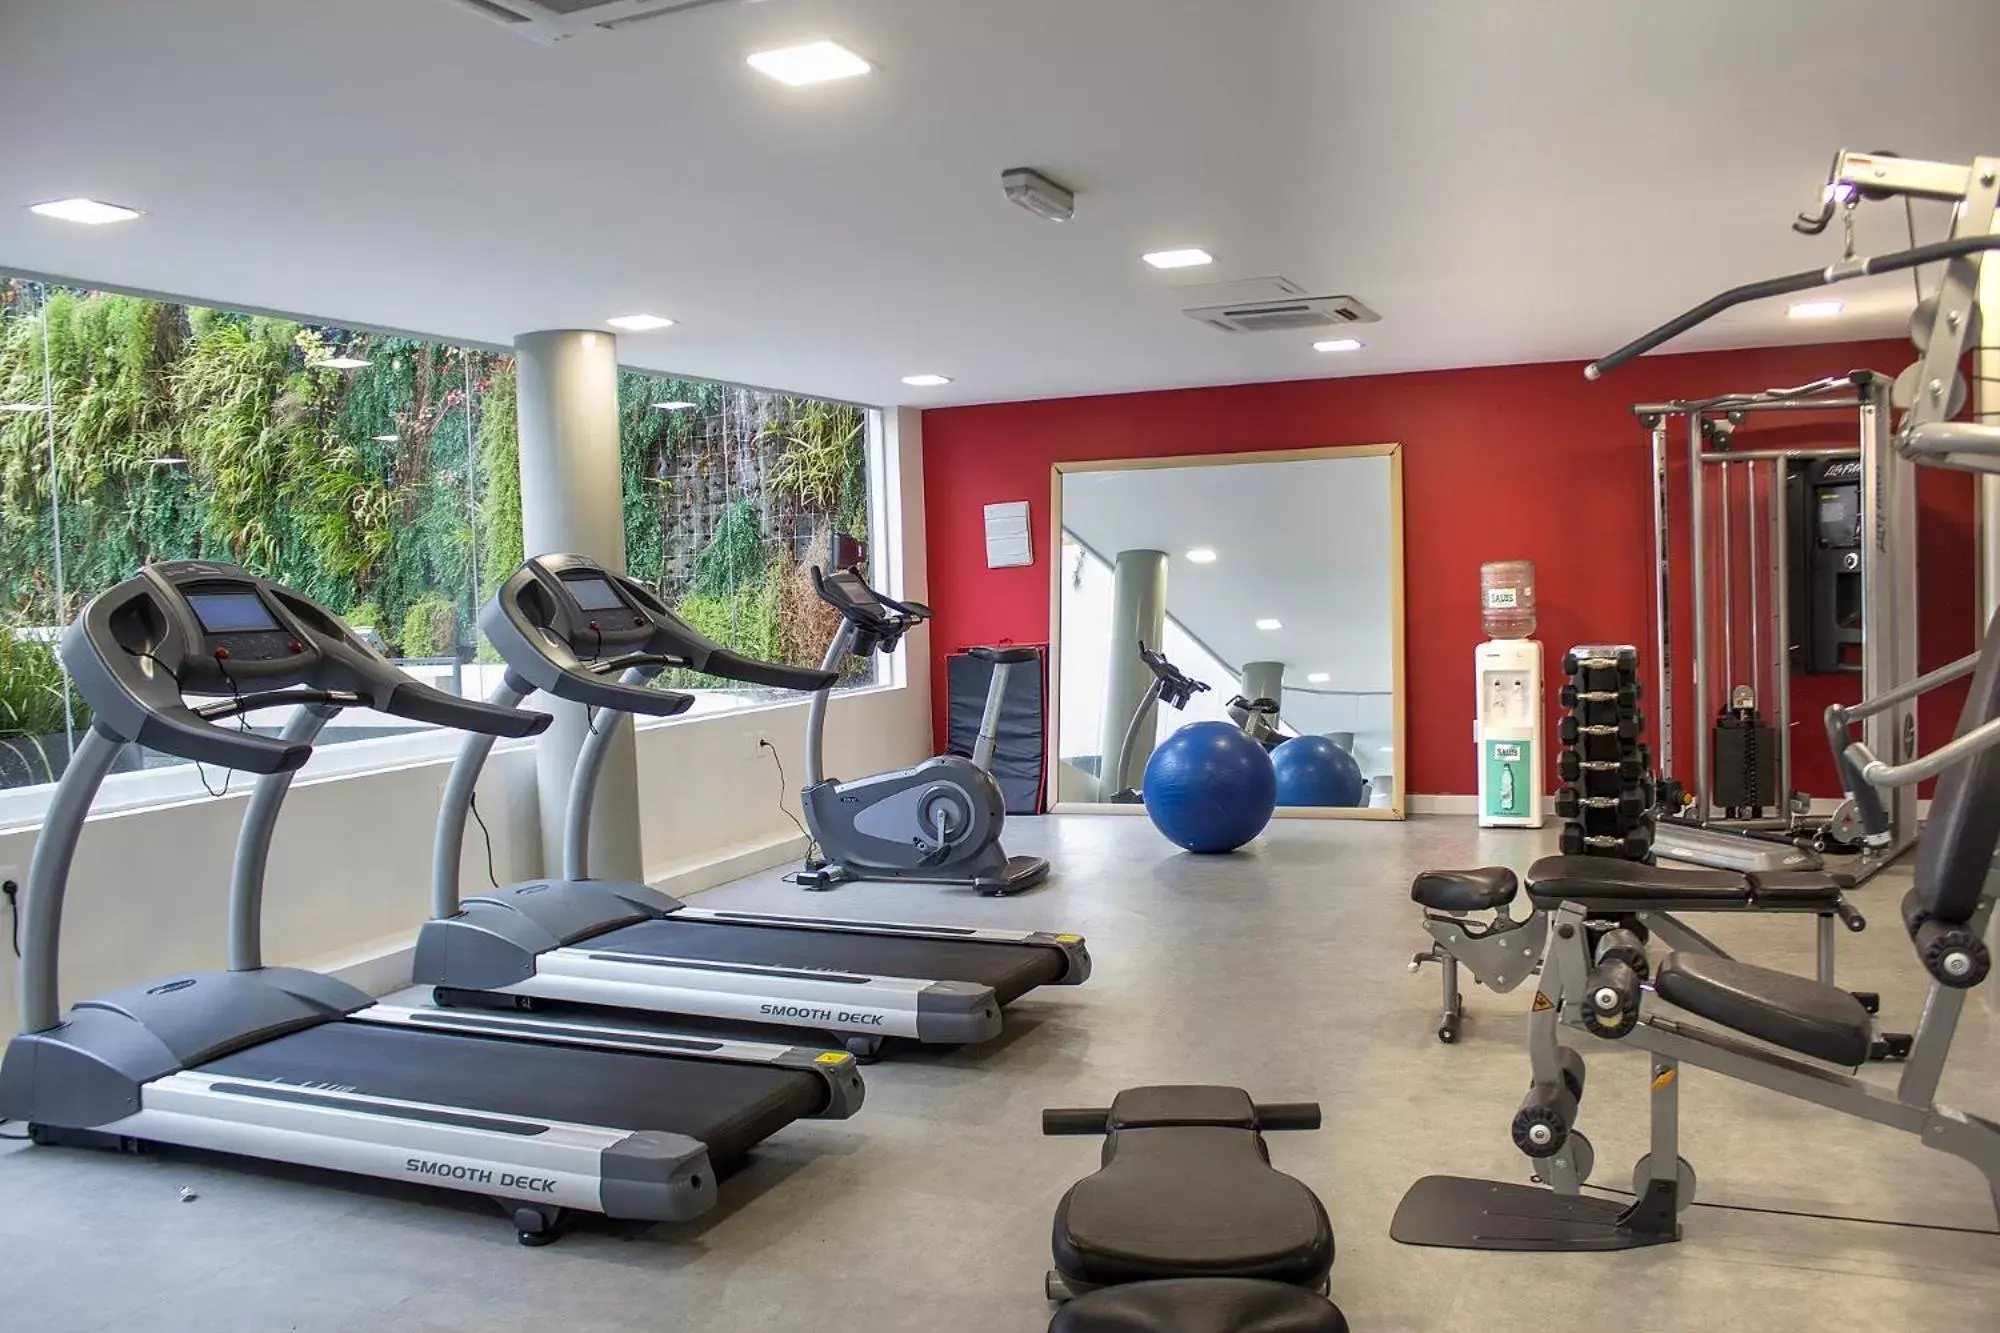 Fitness centre/facilities, Fitness Center/Facilities in Regency Way Montevideo Hotel